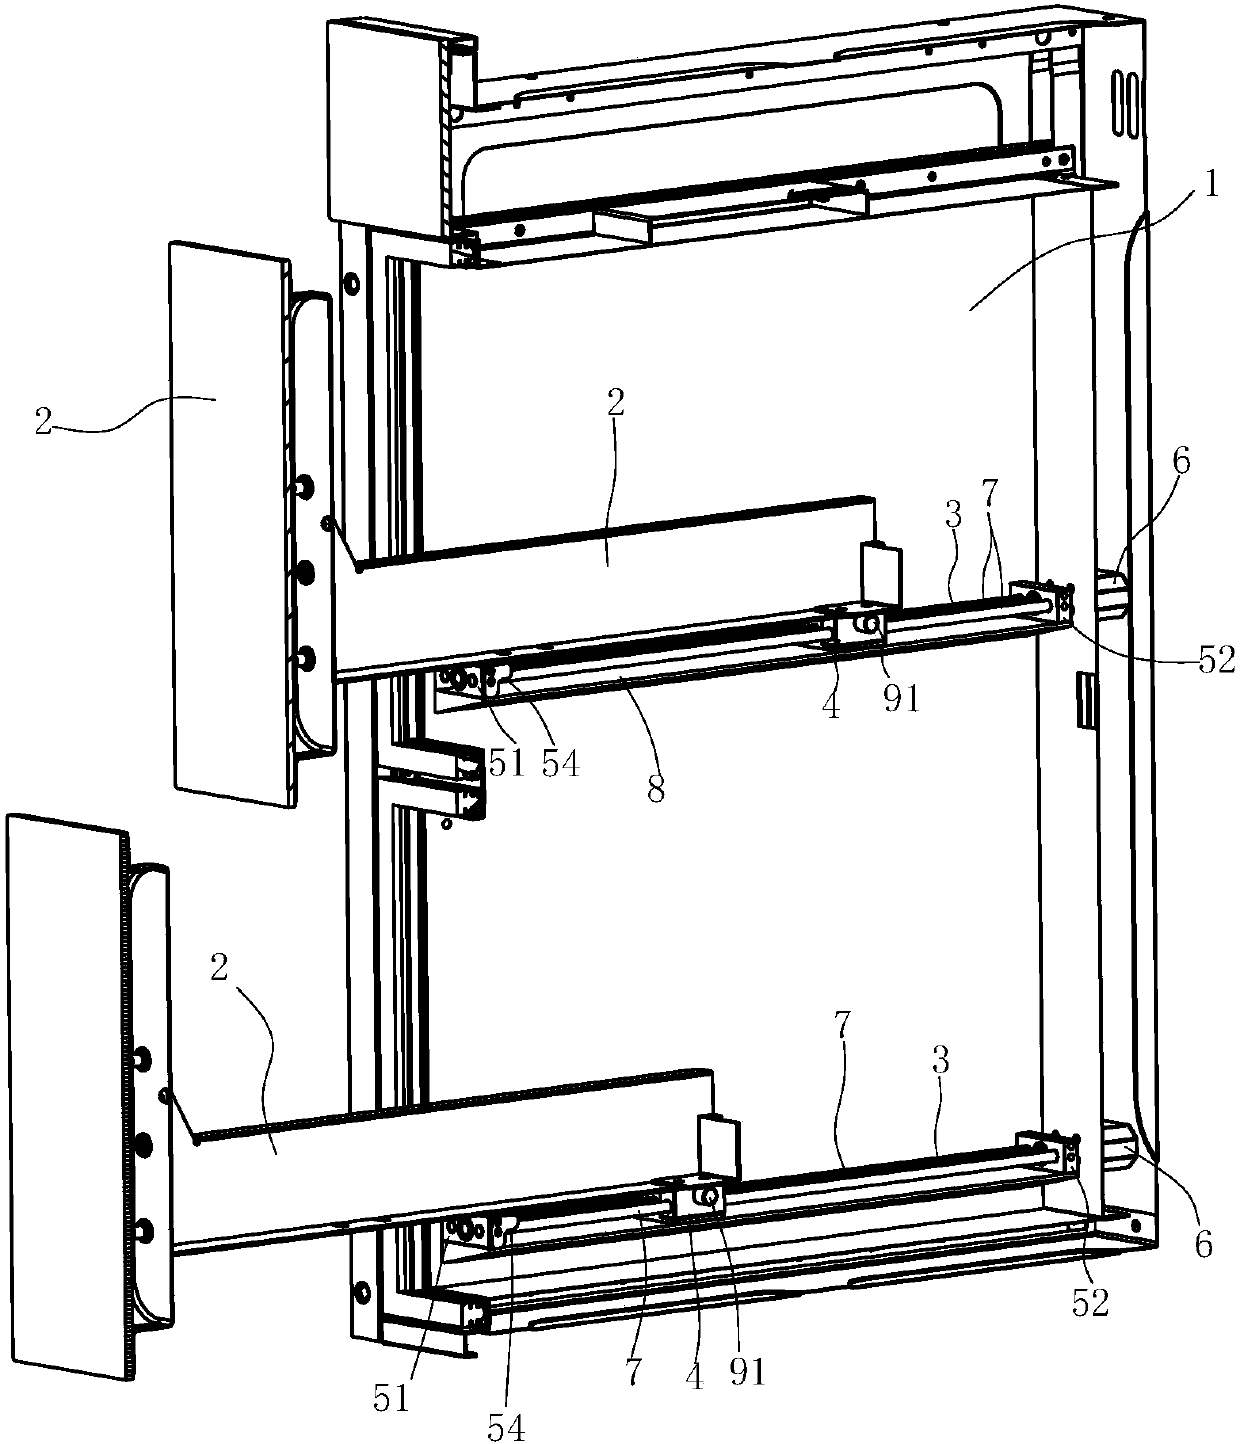 Drawer opening mechanism